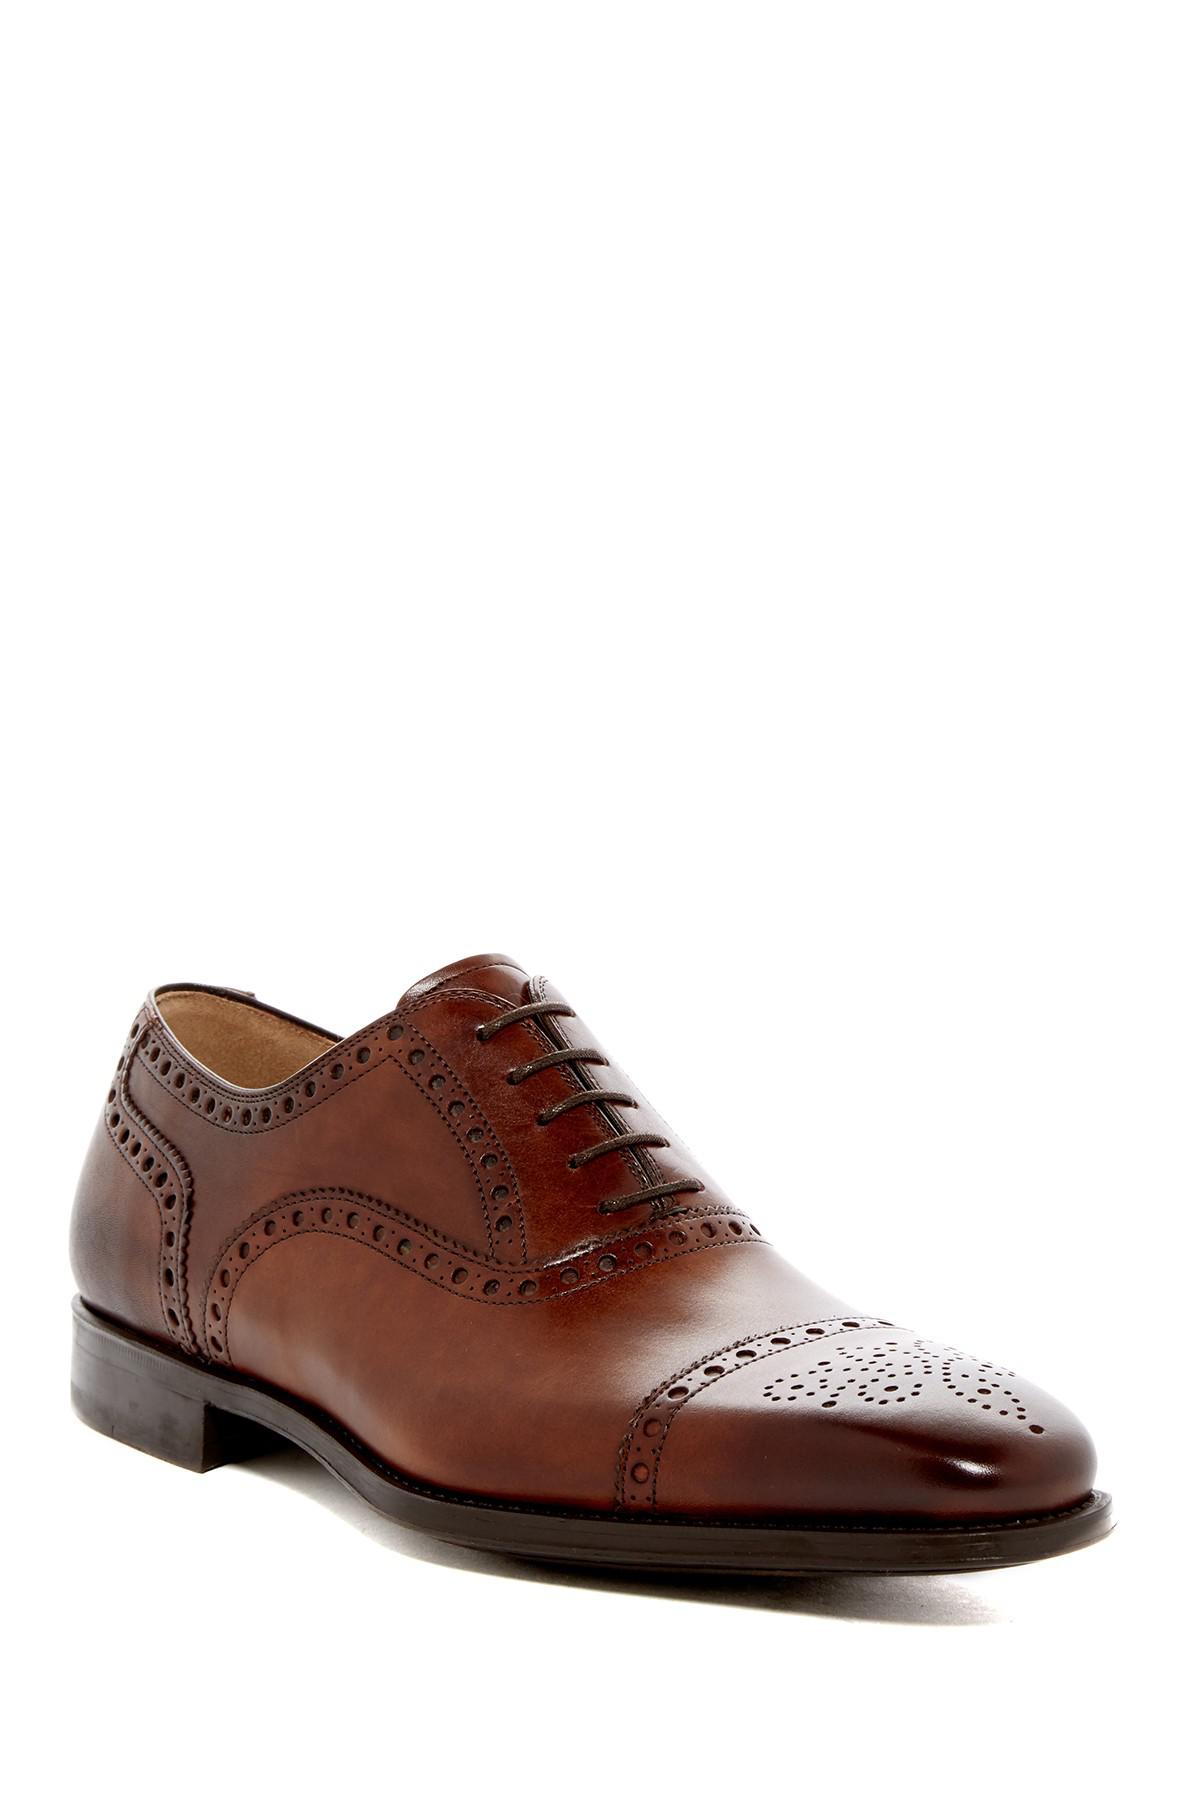 Lyst - Magnanni Shoes Men ́s Gerardo Oxford in Brown for Men